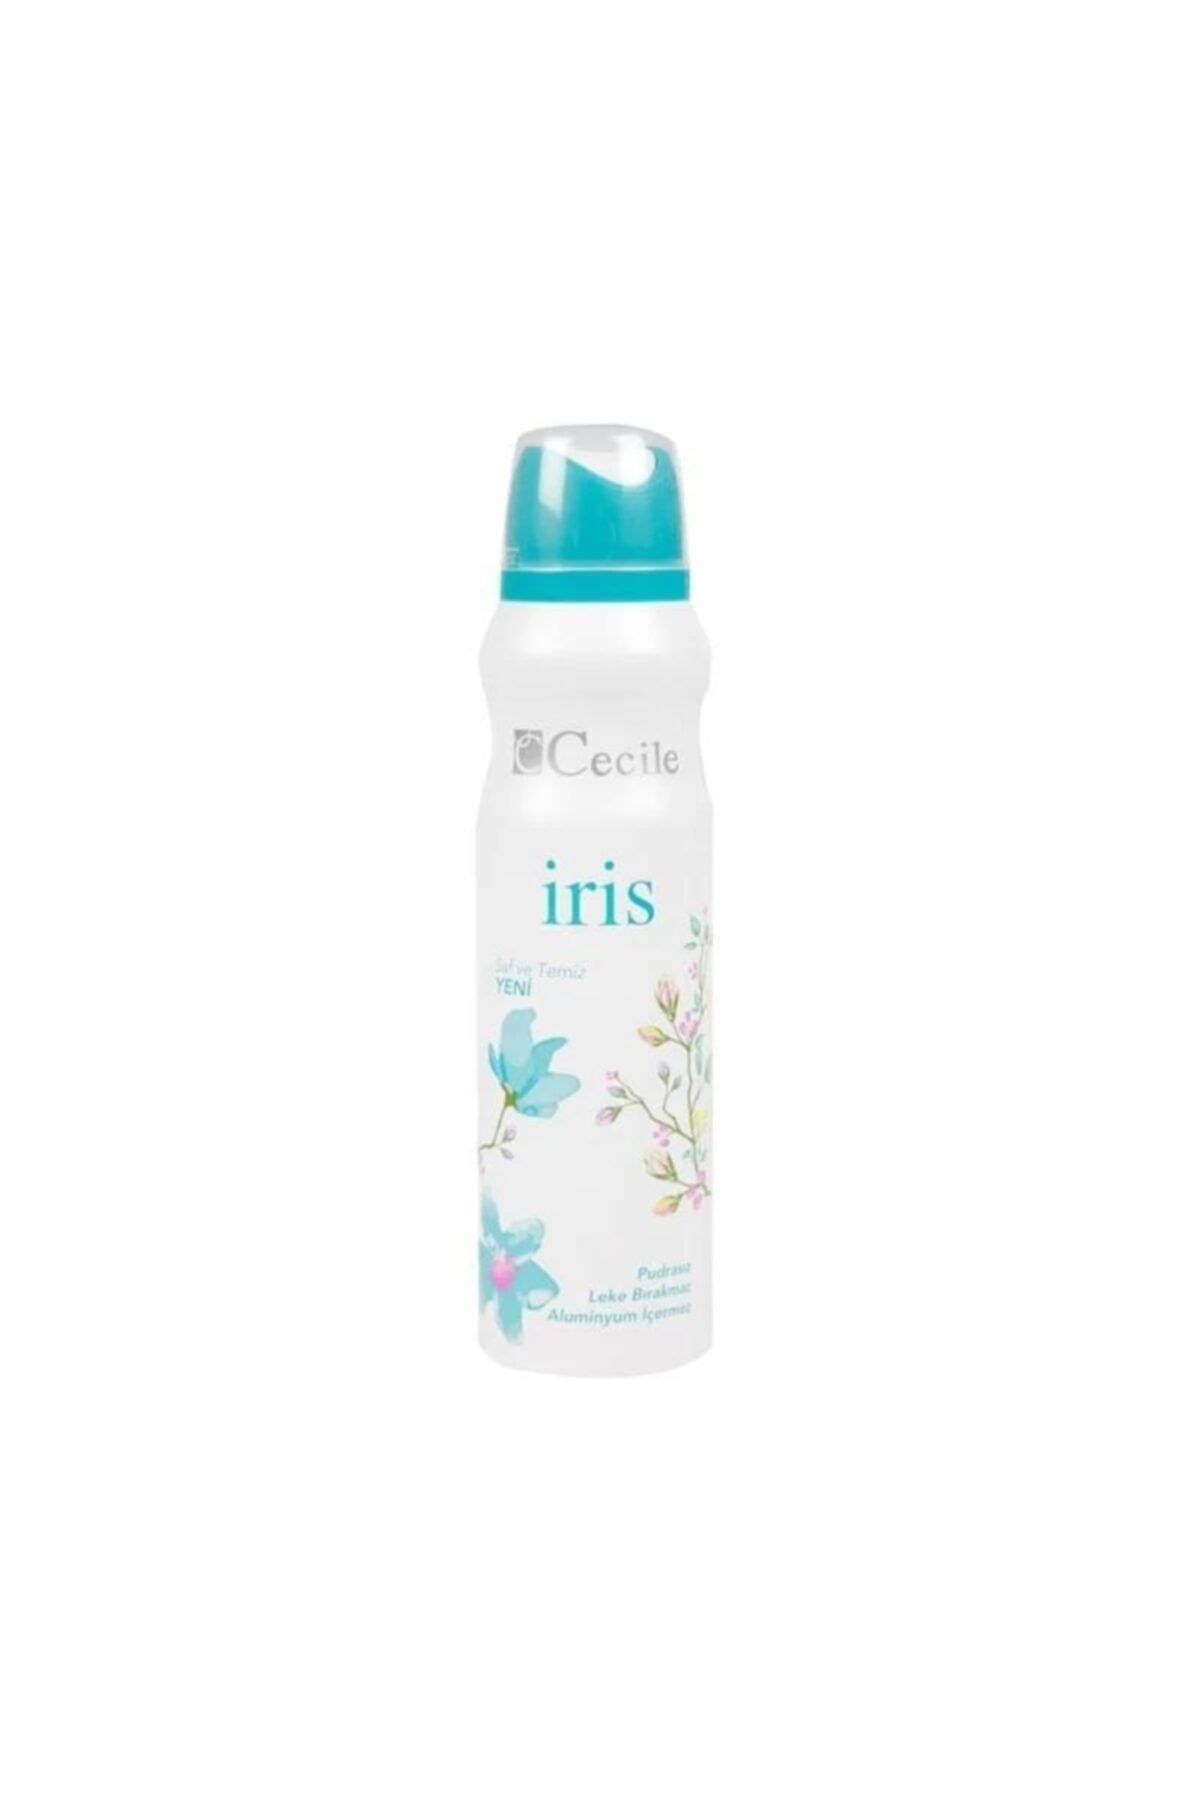 Cecile Cecıle Deodorant Bayan Iris 150ml